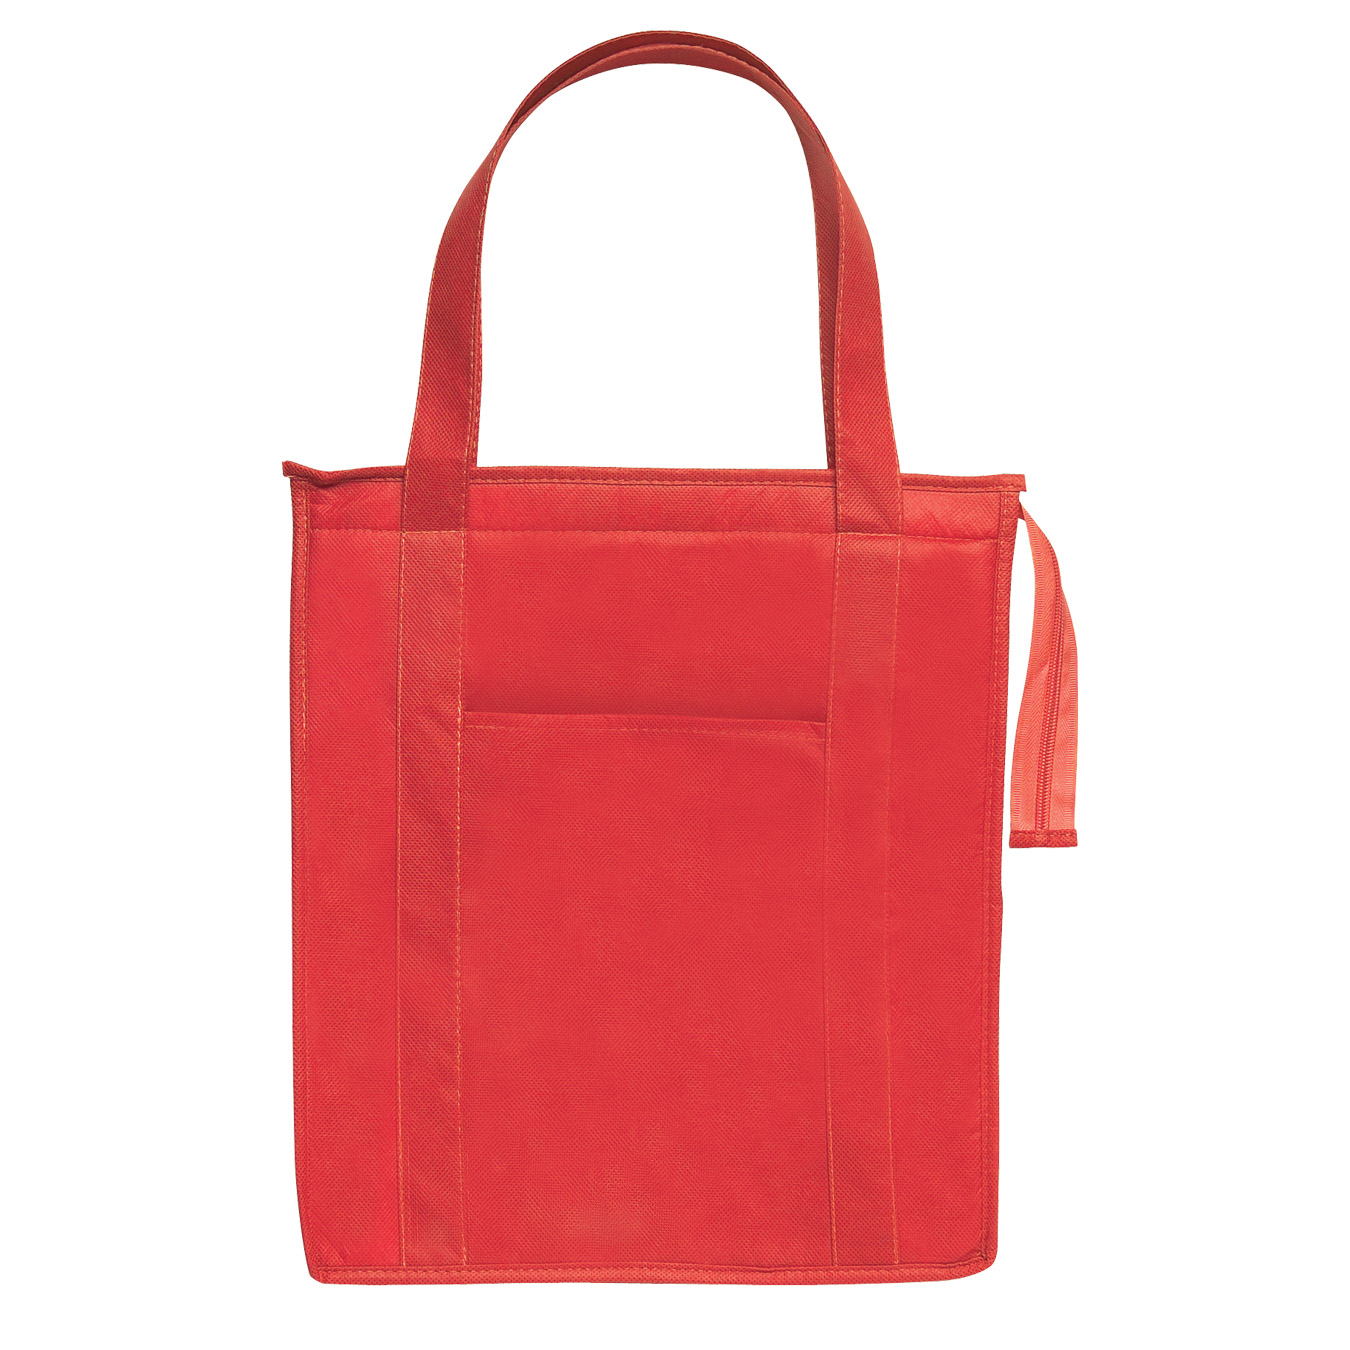 Printed Non-Woven Insulated Shopper Tote Bag